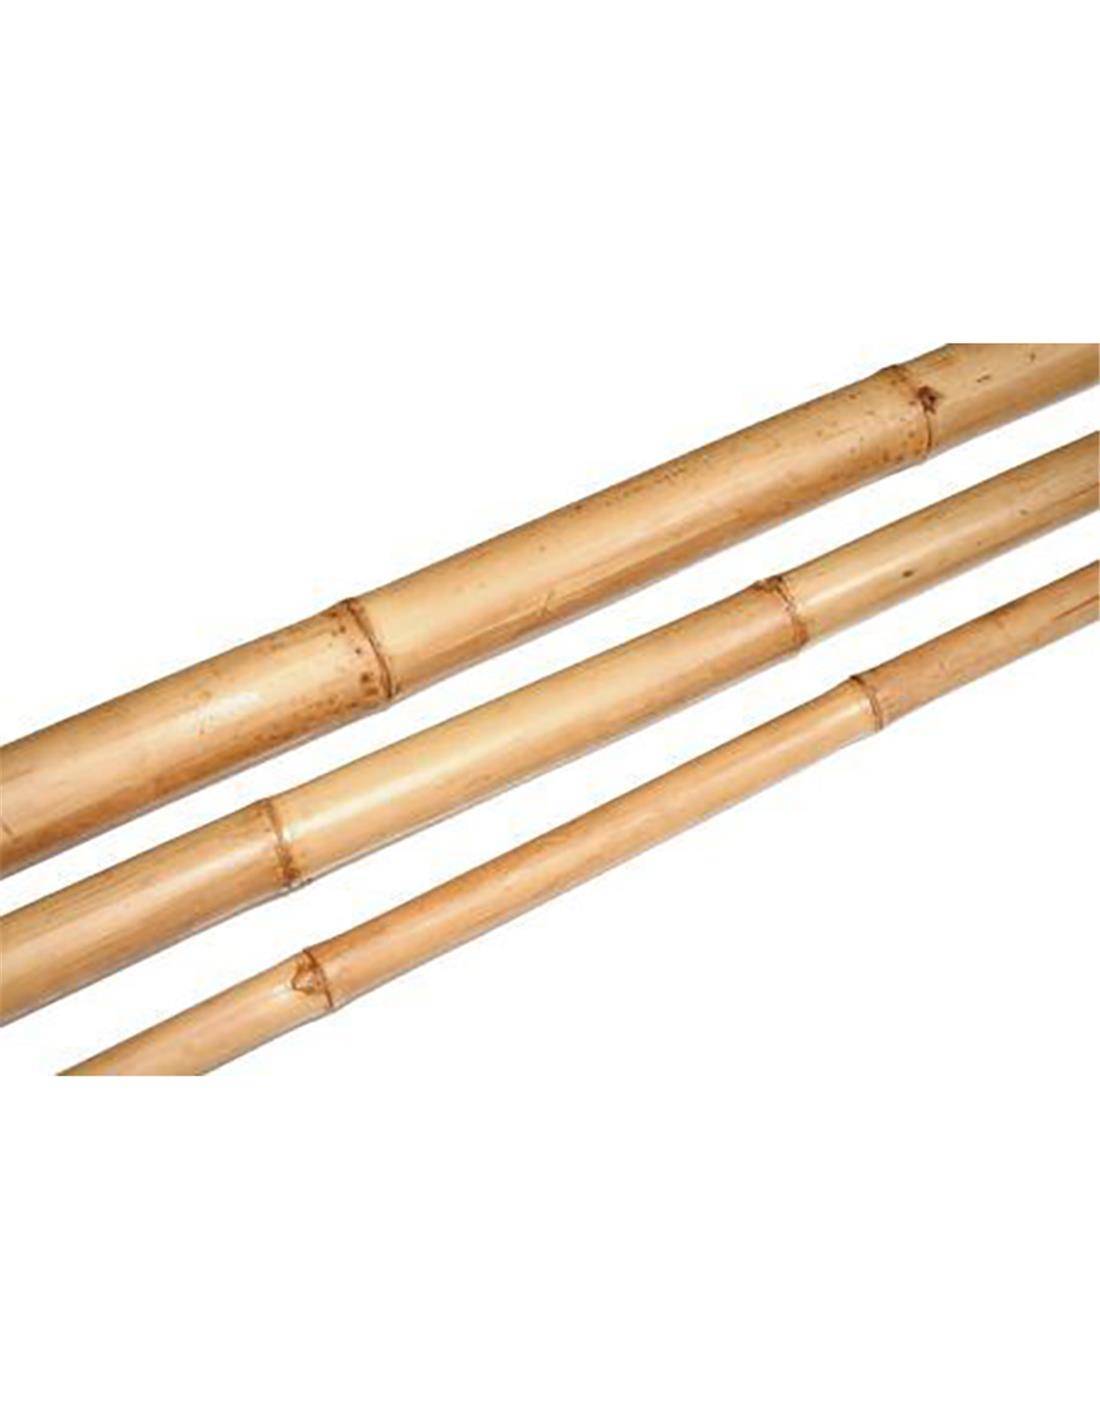 Stem Bamboo Laq. D6-8 L210.0 NATURAL